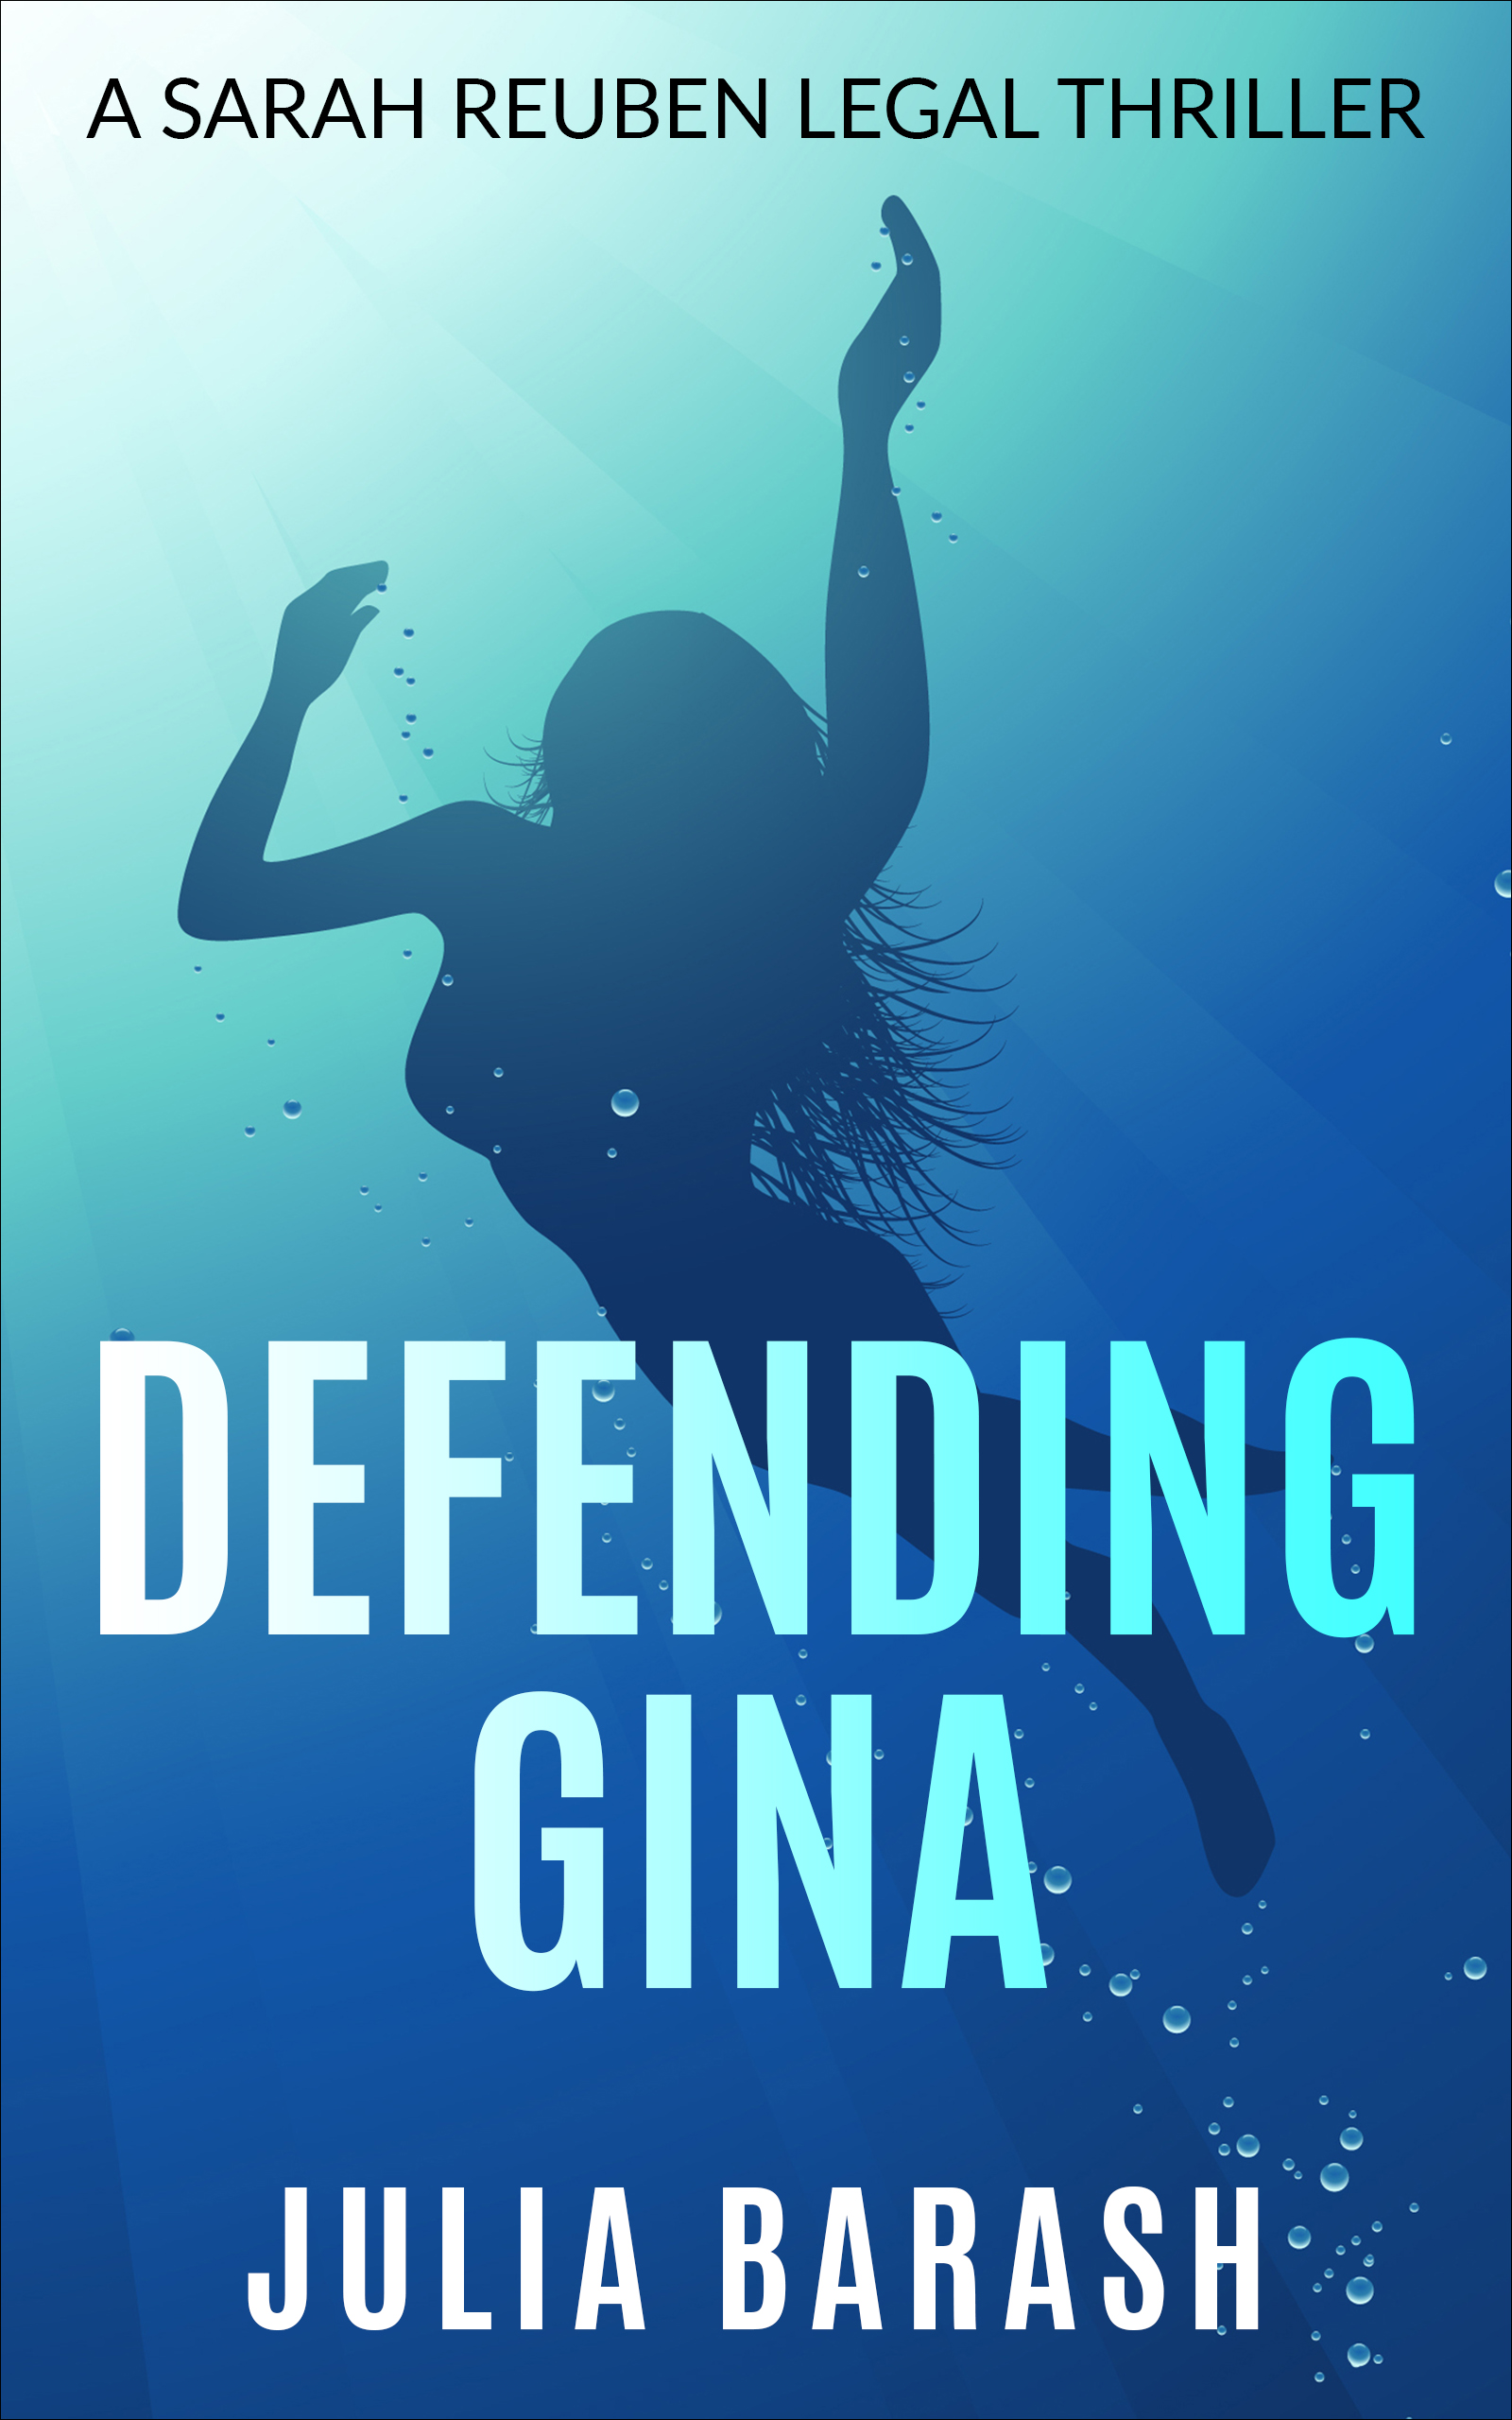 FREE: Defending Gina by Julia Barash